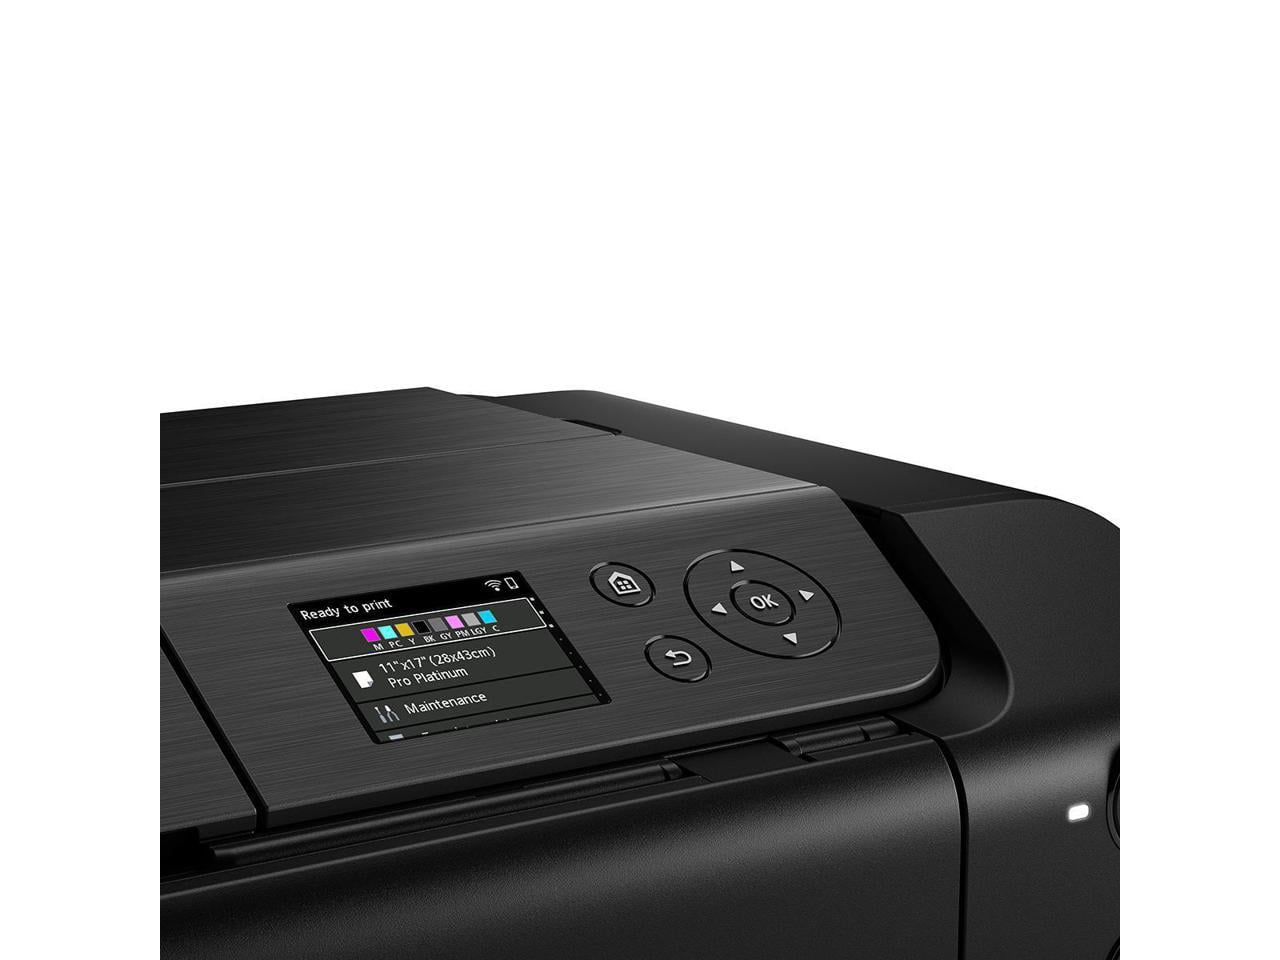 PIXMA PRO-200 printing on glossy paper Problem - Canon Community